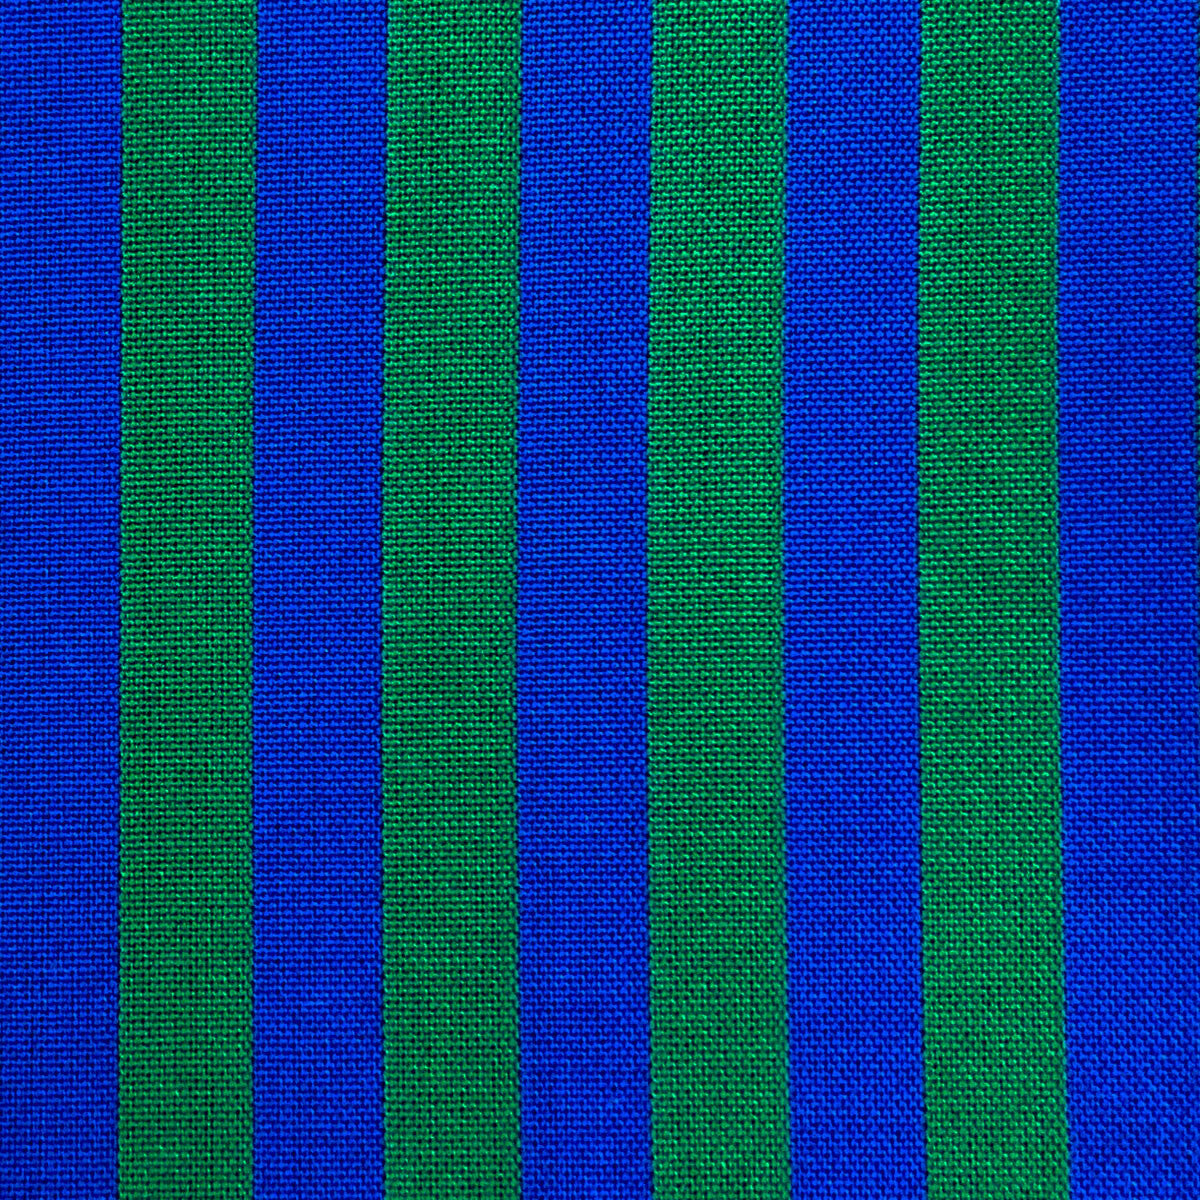 Benjamin fabric in azul/verde color - pattern LCT1057.007.0 - by Gaston y Daniela in the Lorenzo Castillo VI collection